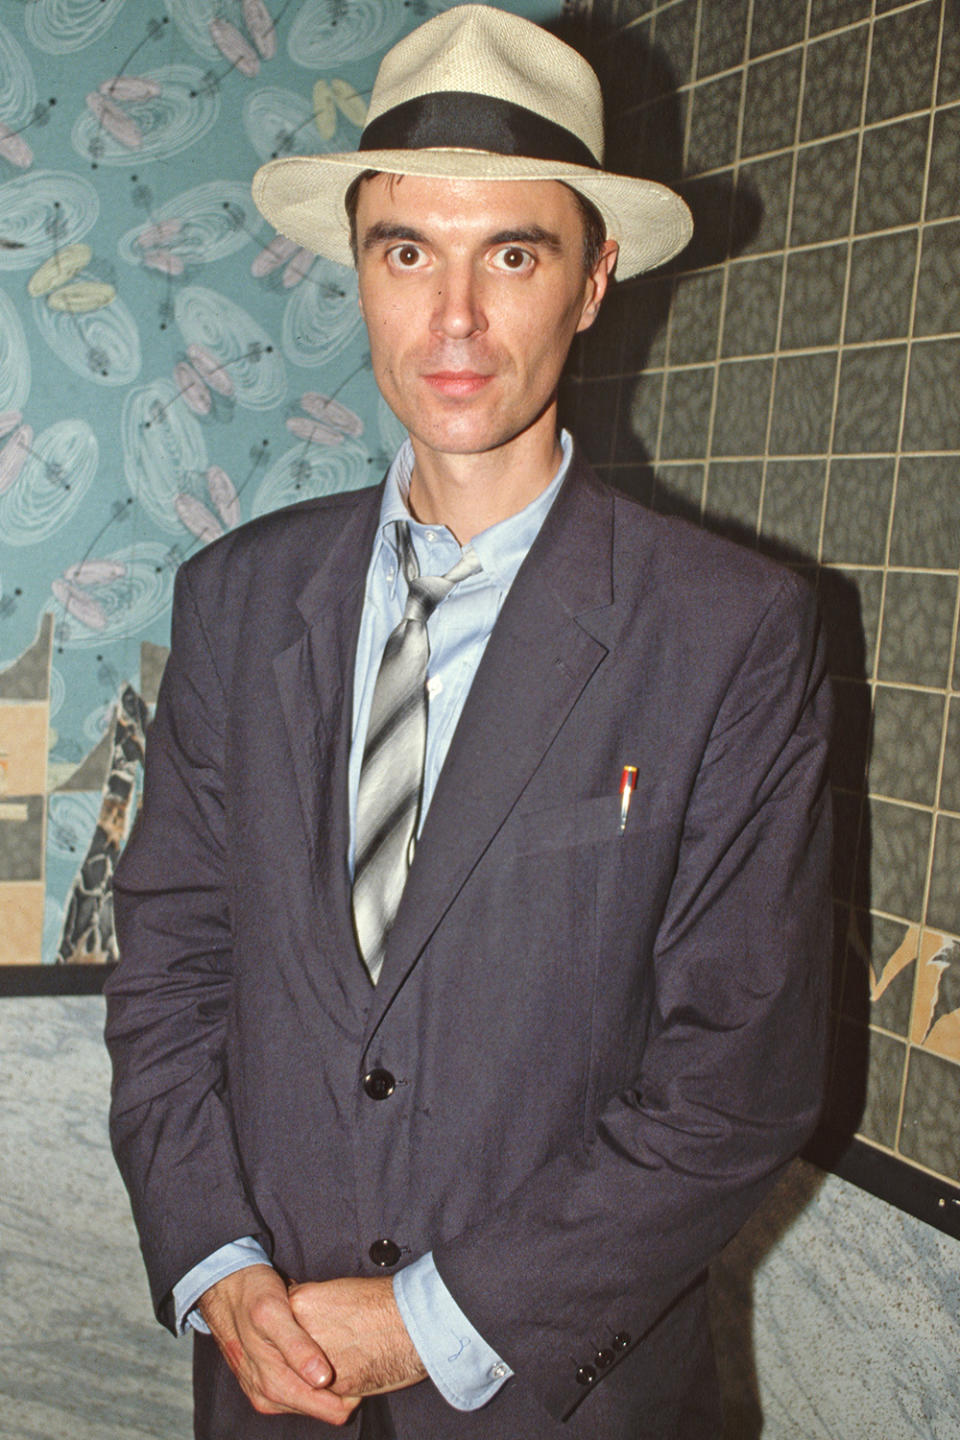 1985: David Byrne